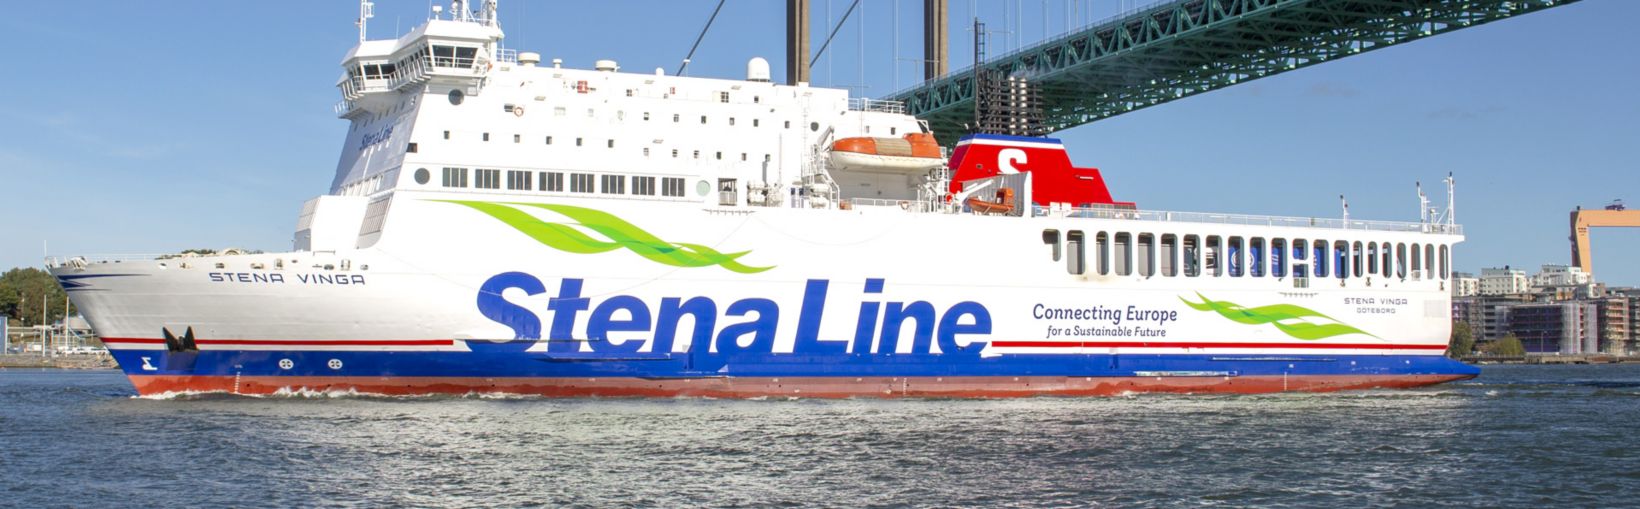 Stena Vinga ferry at sea